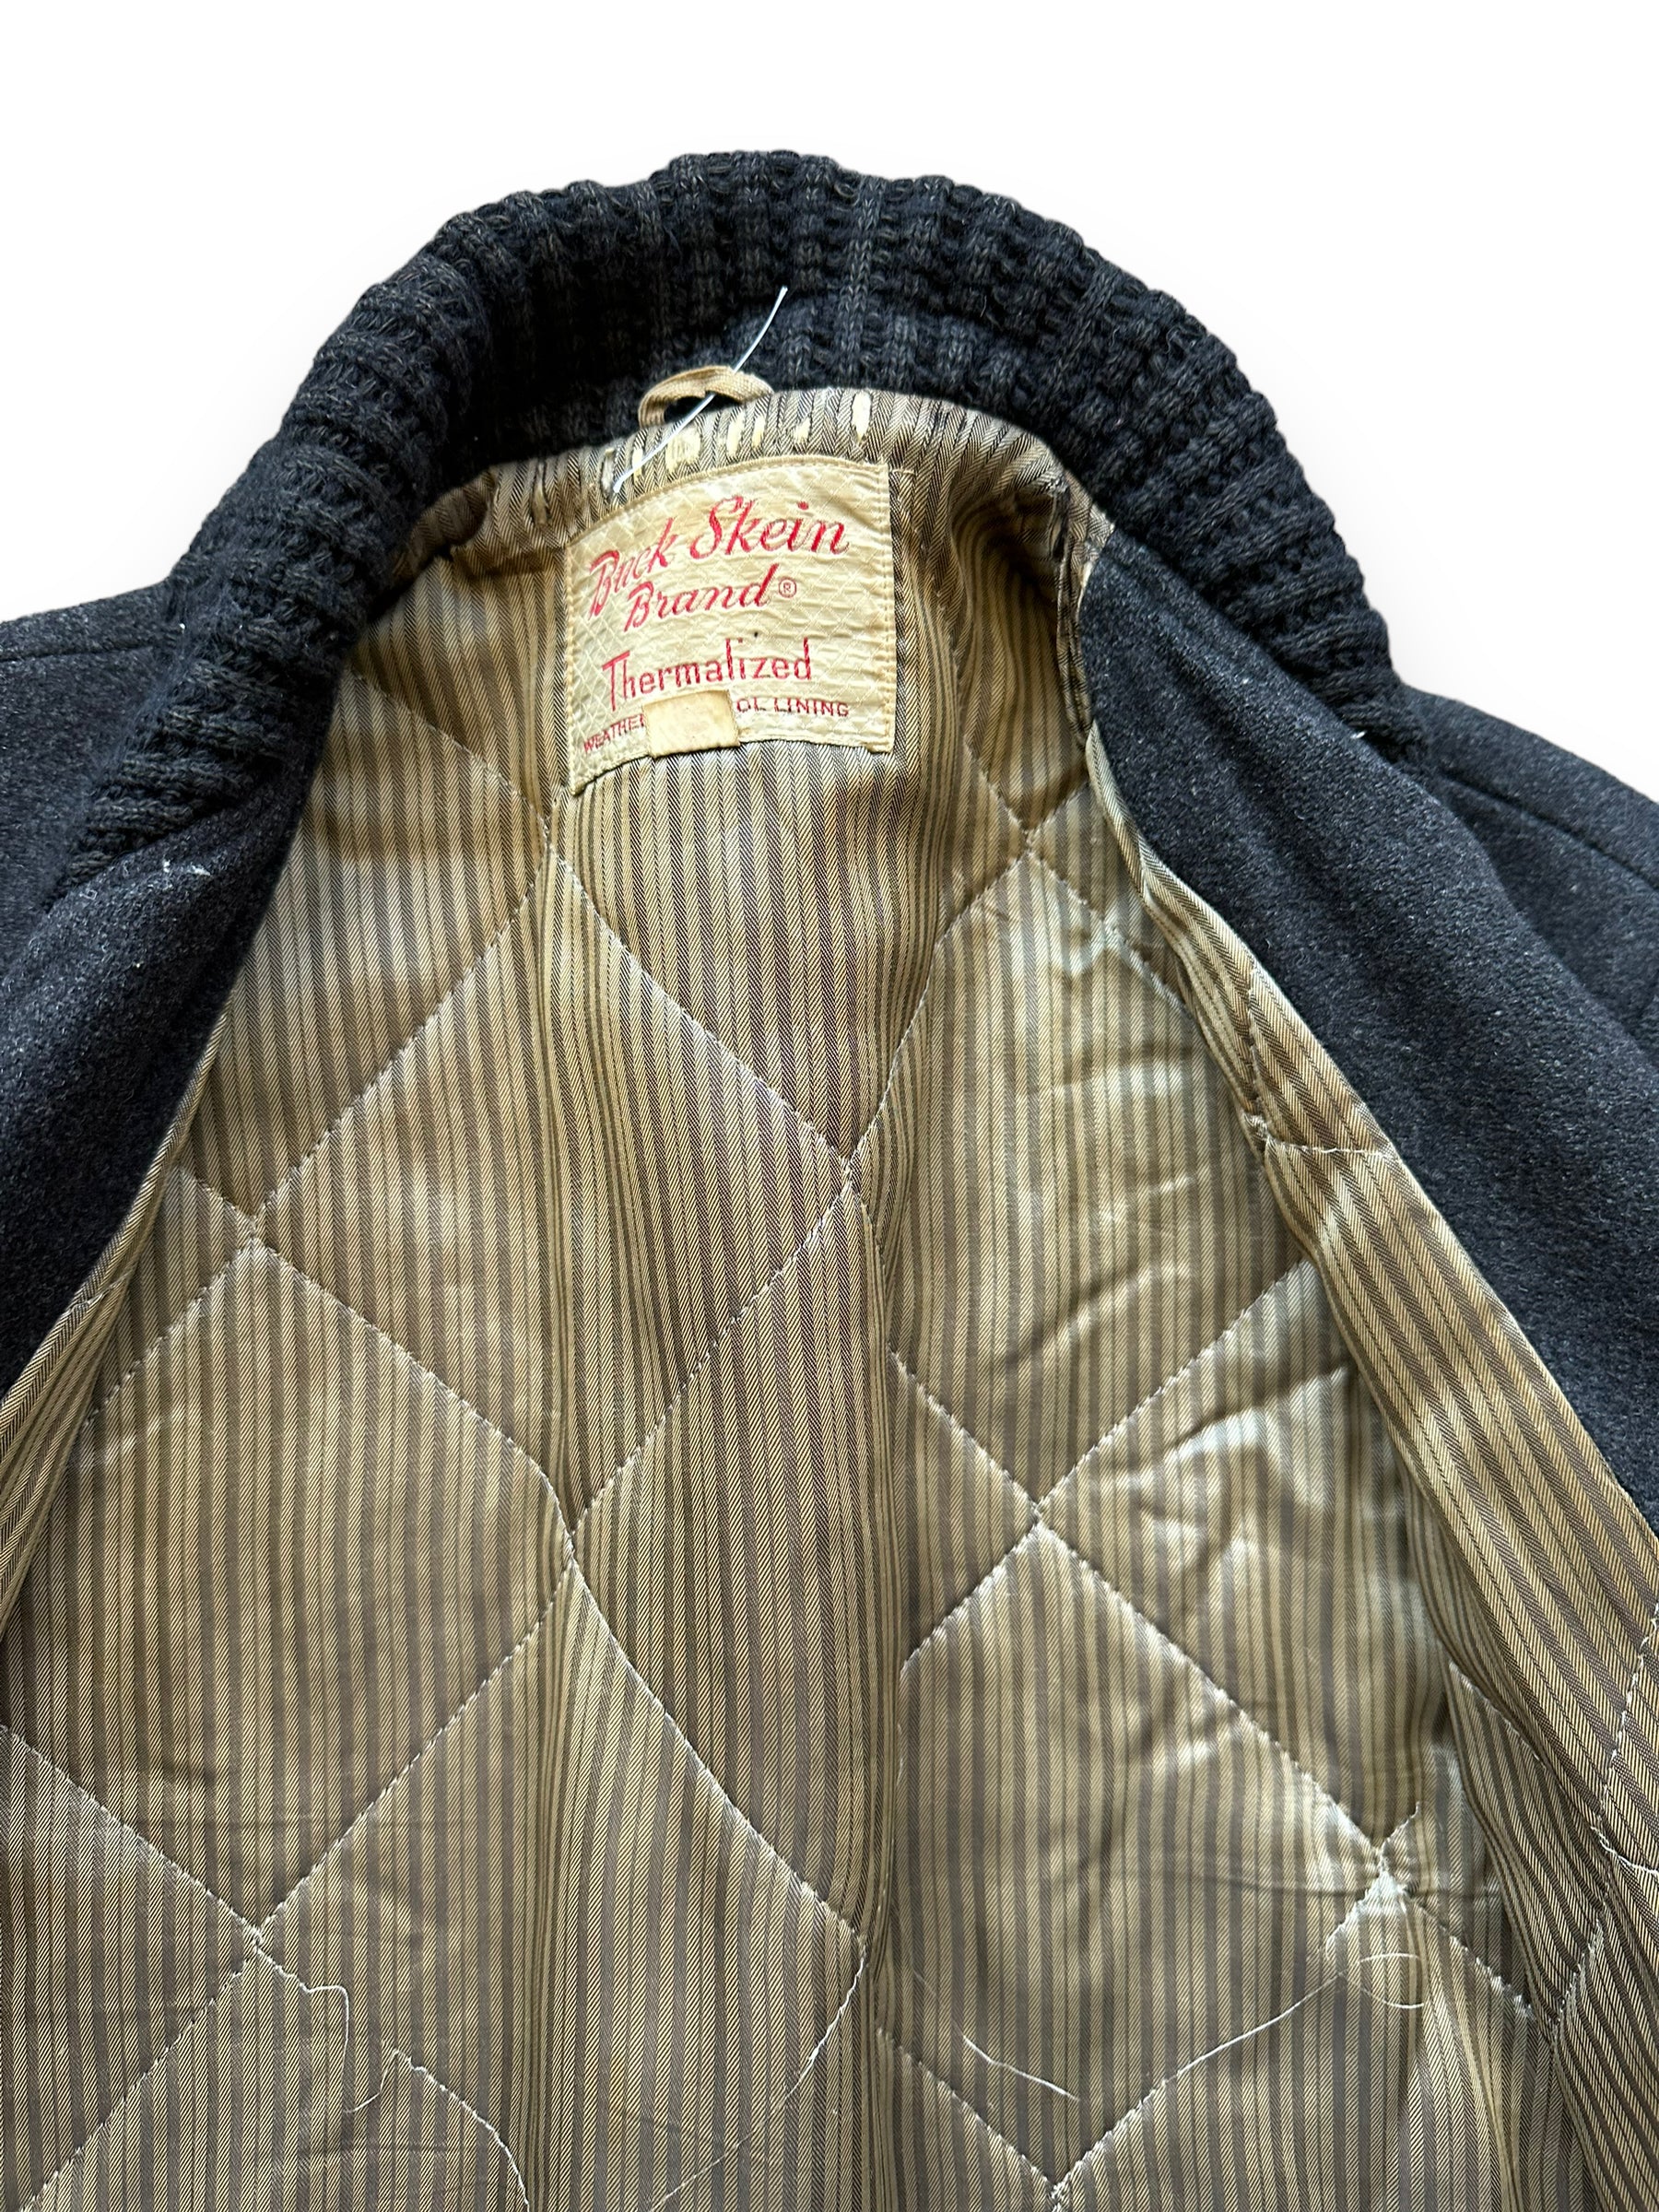 Tag View on Vintage Buck Skein Clicker Jacket SZ 42 |  Barn Owl Vintage Goods | Vintage Clicker Coat Seattle